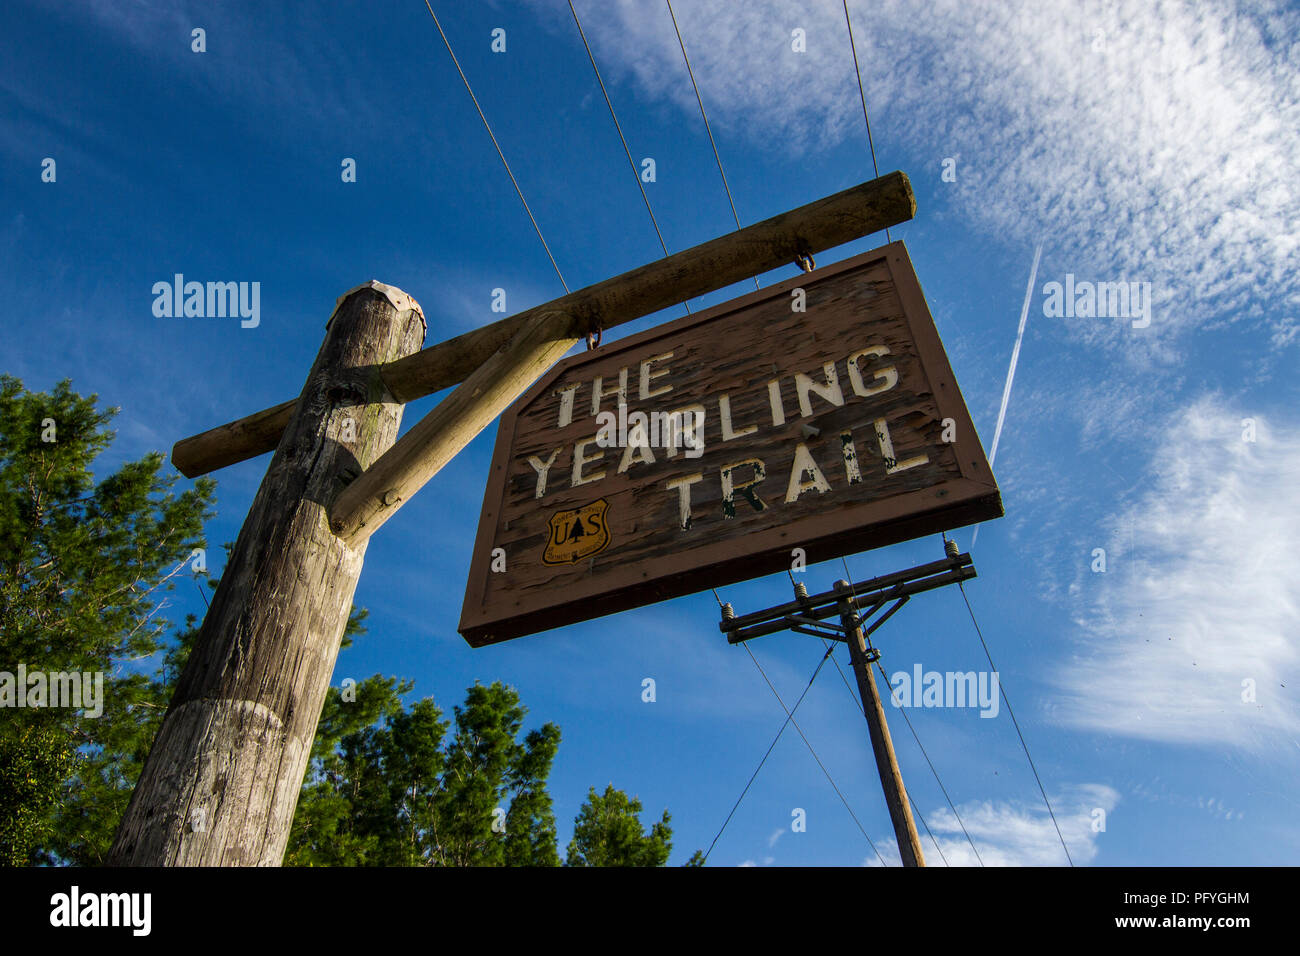 Yearling trail Ocala Stock Photo